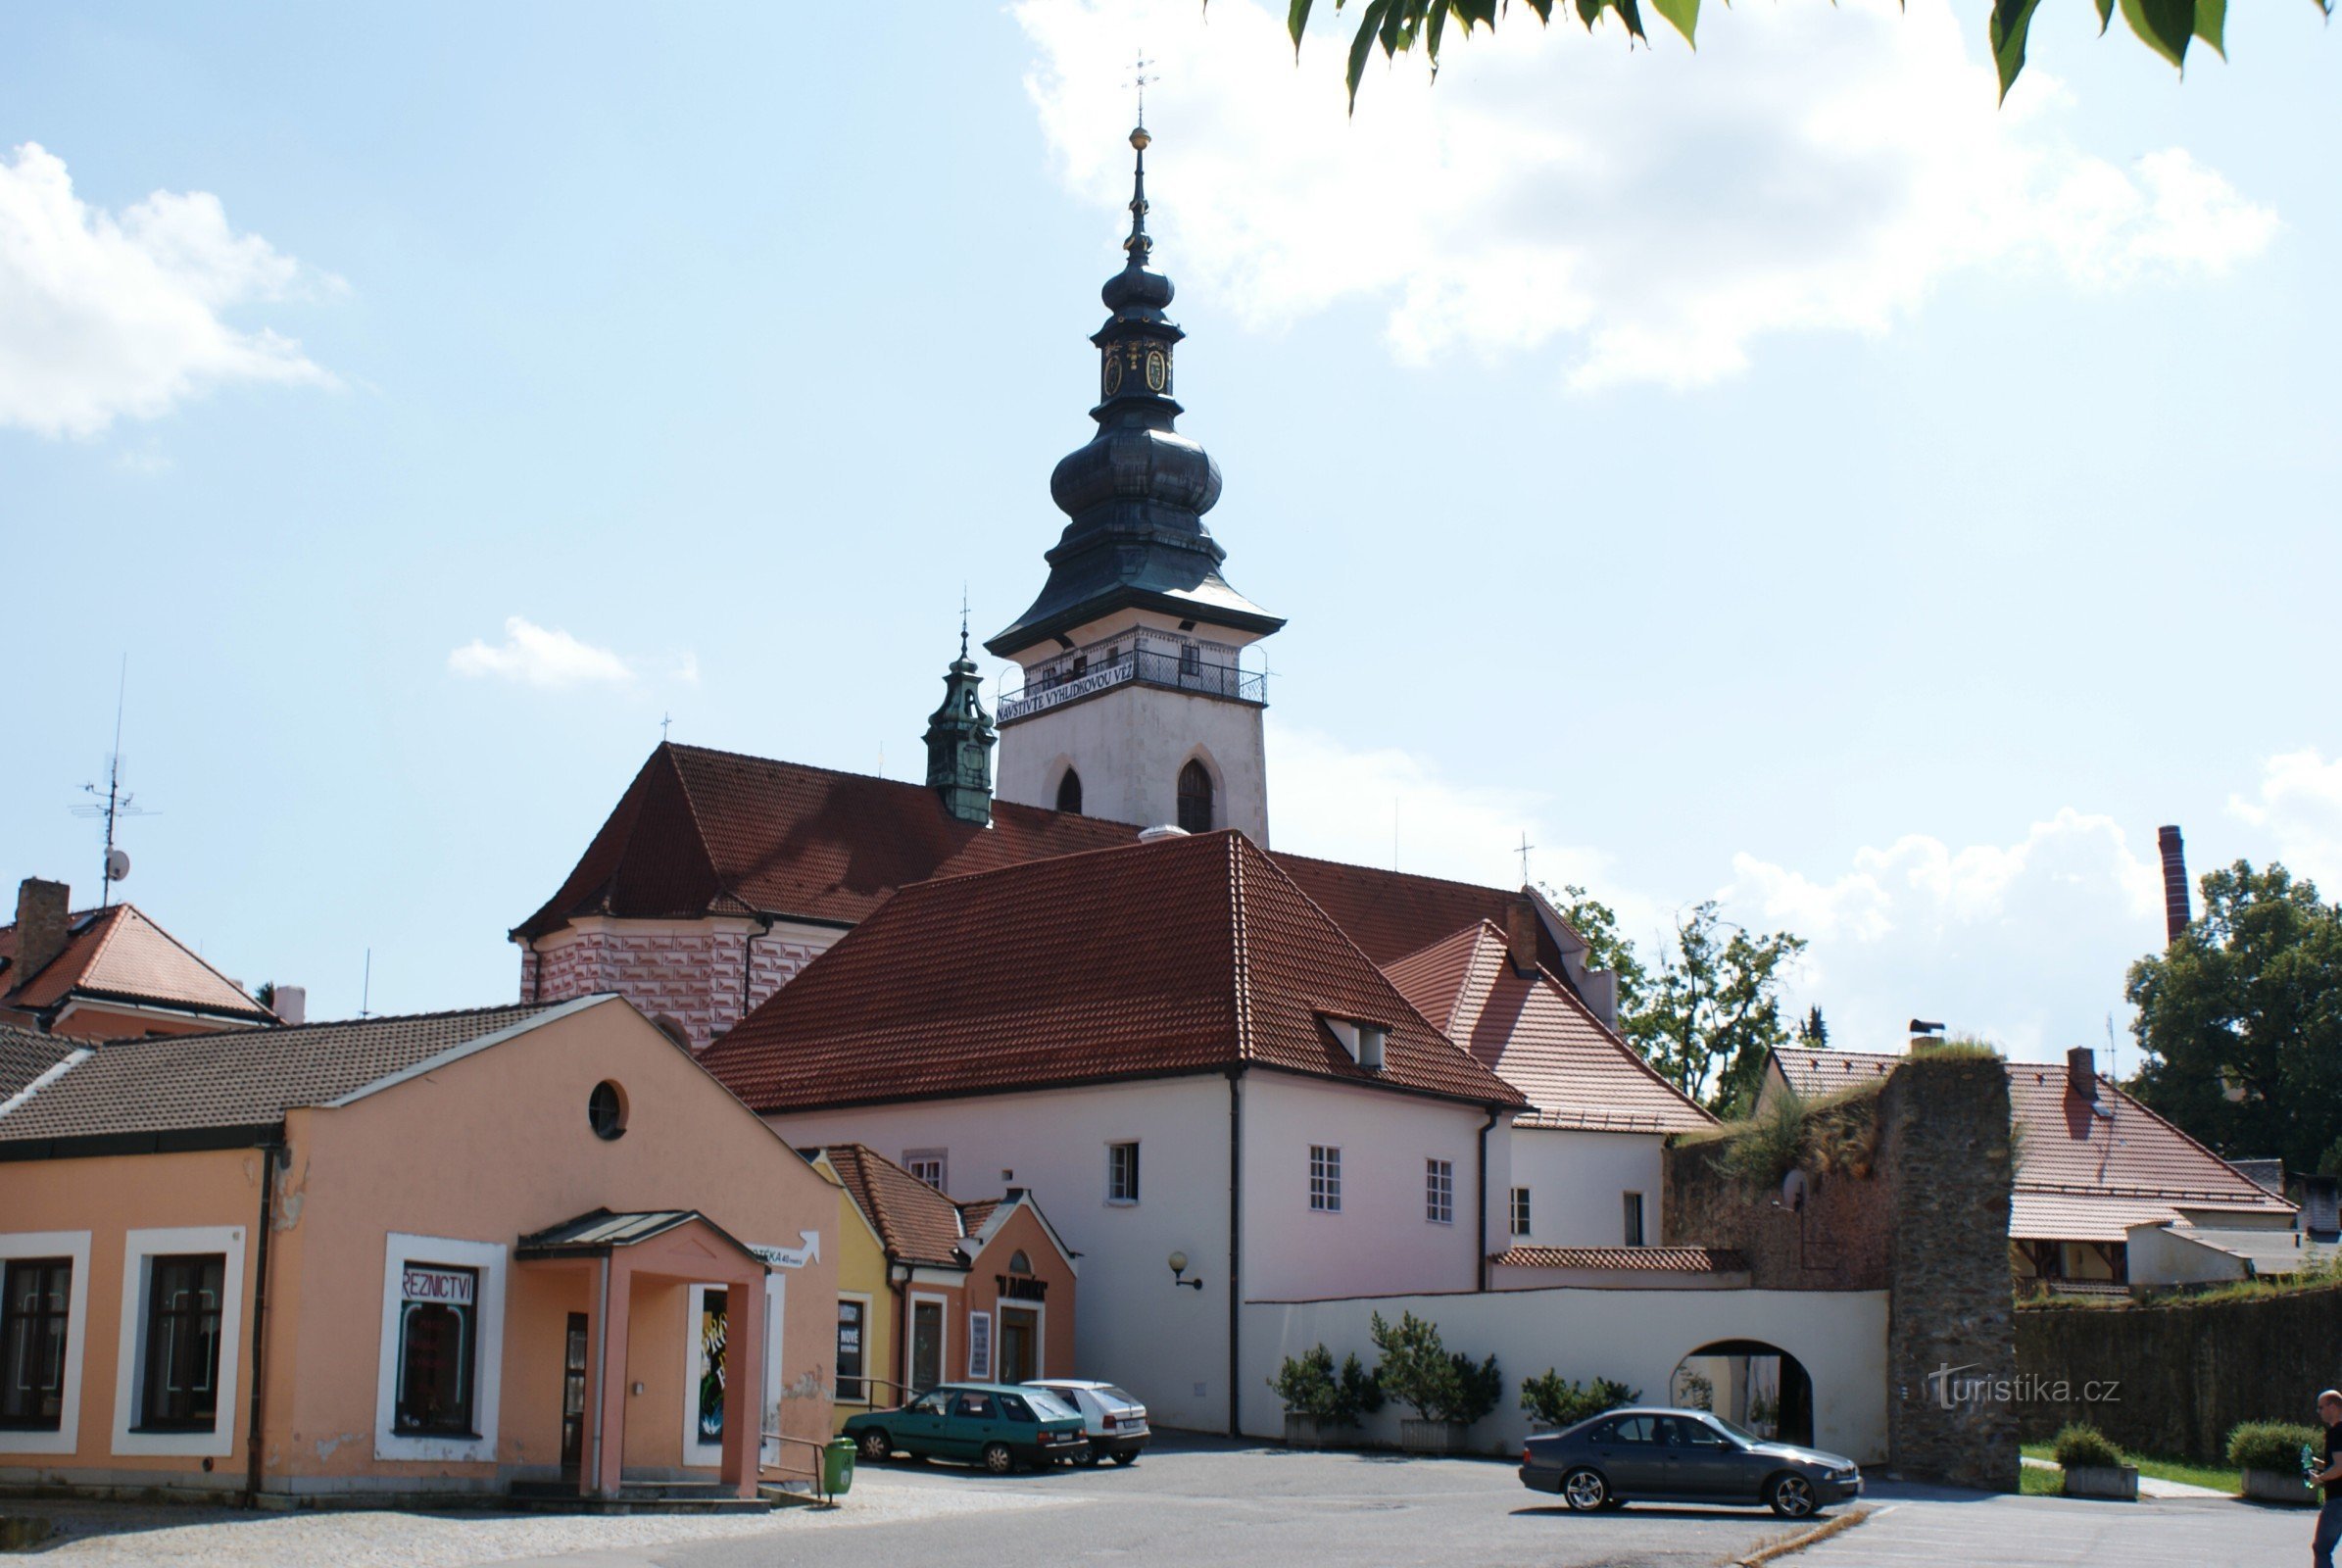 Pelhřimov – Βασιλική του Αγ. Βαρθολομαίος με πύργο παρατήρησης